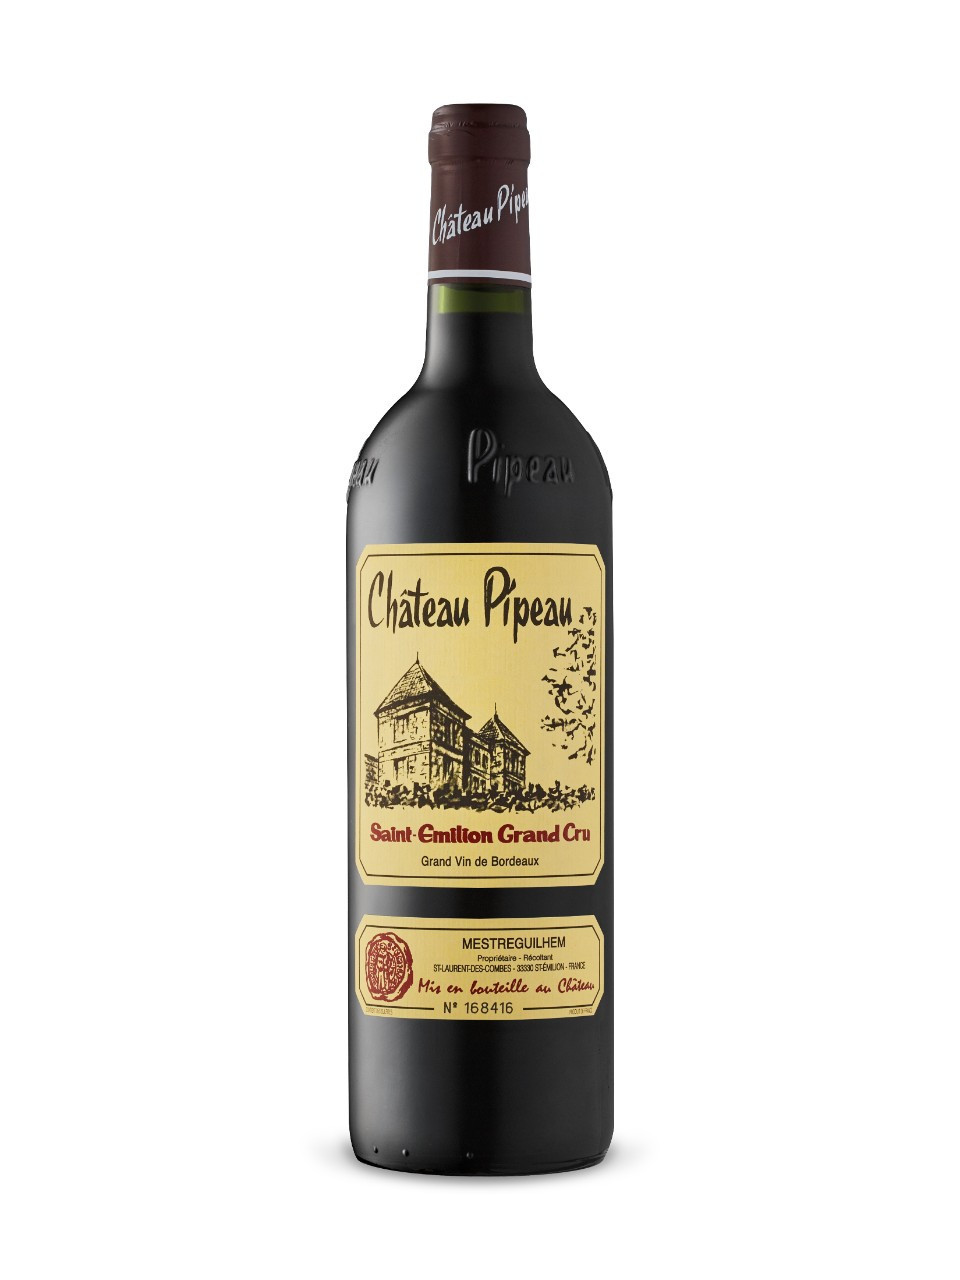 Château pipeau saint-Émilion grand cru blend - meritage  750 ml bottle 